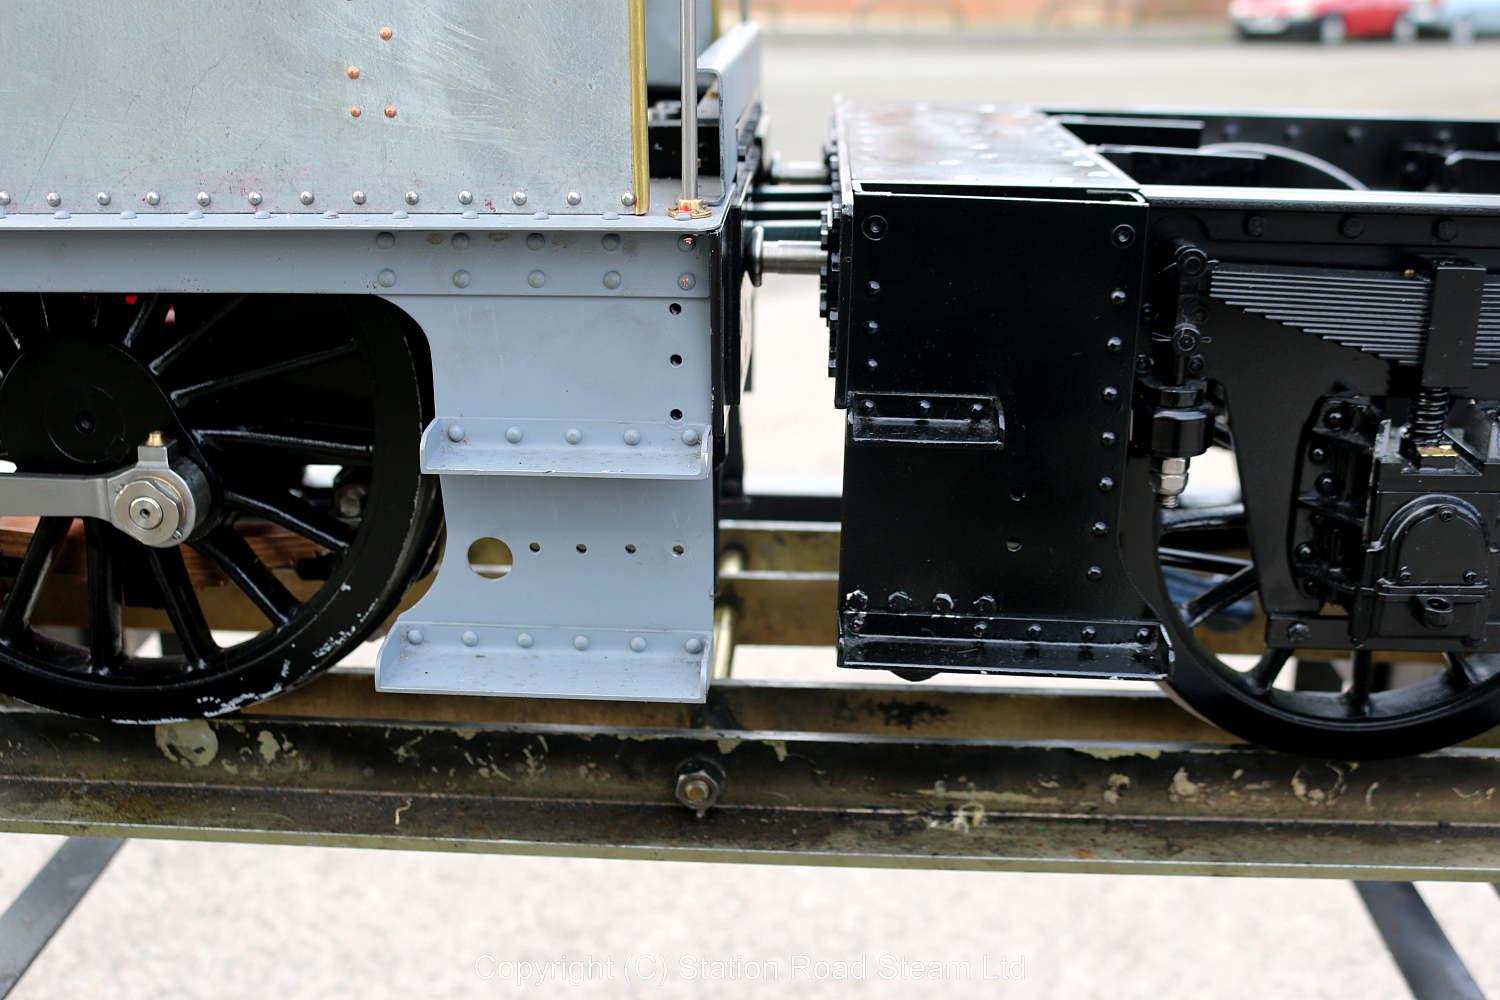 Part-built 7 1/4 inch gauge GWR Collet 0-6-0